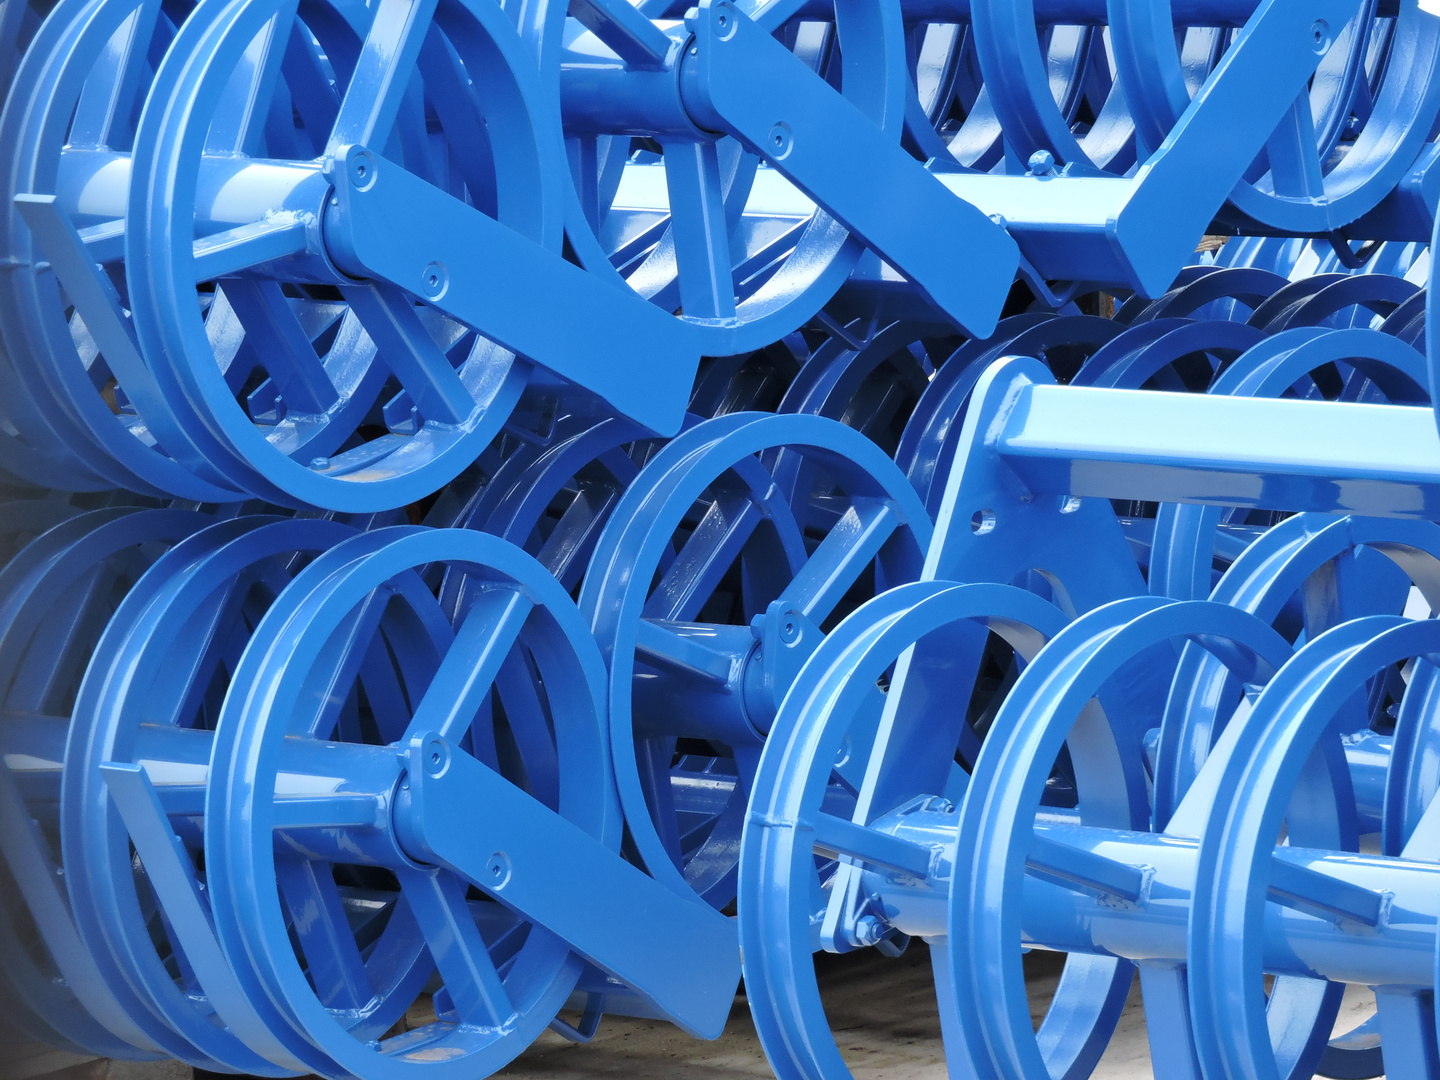 Blue wheels